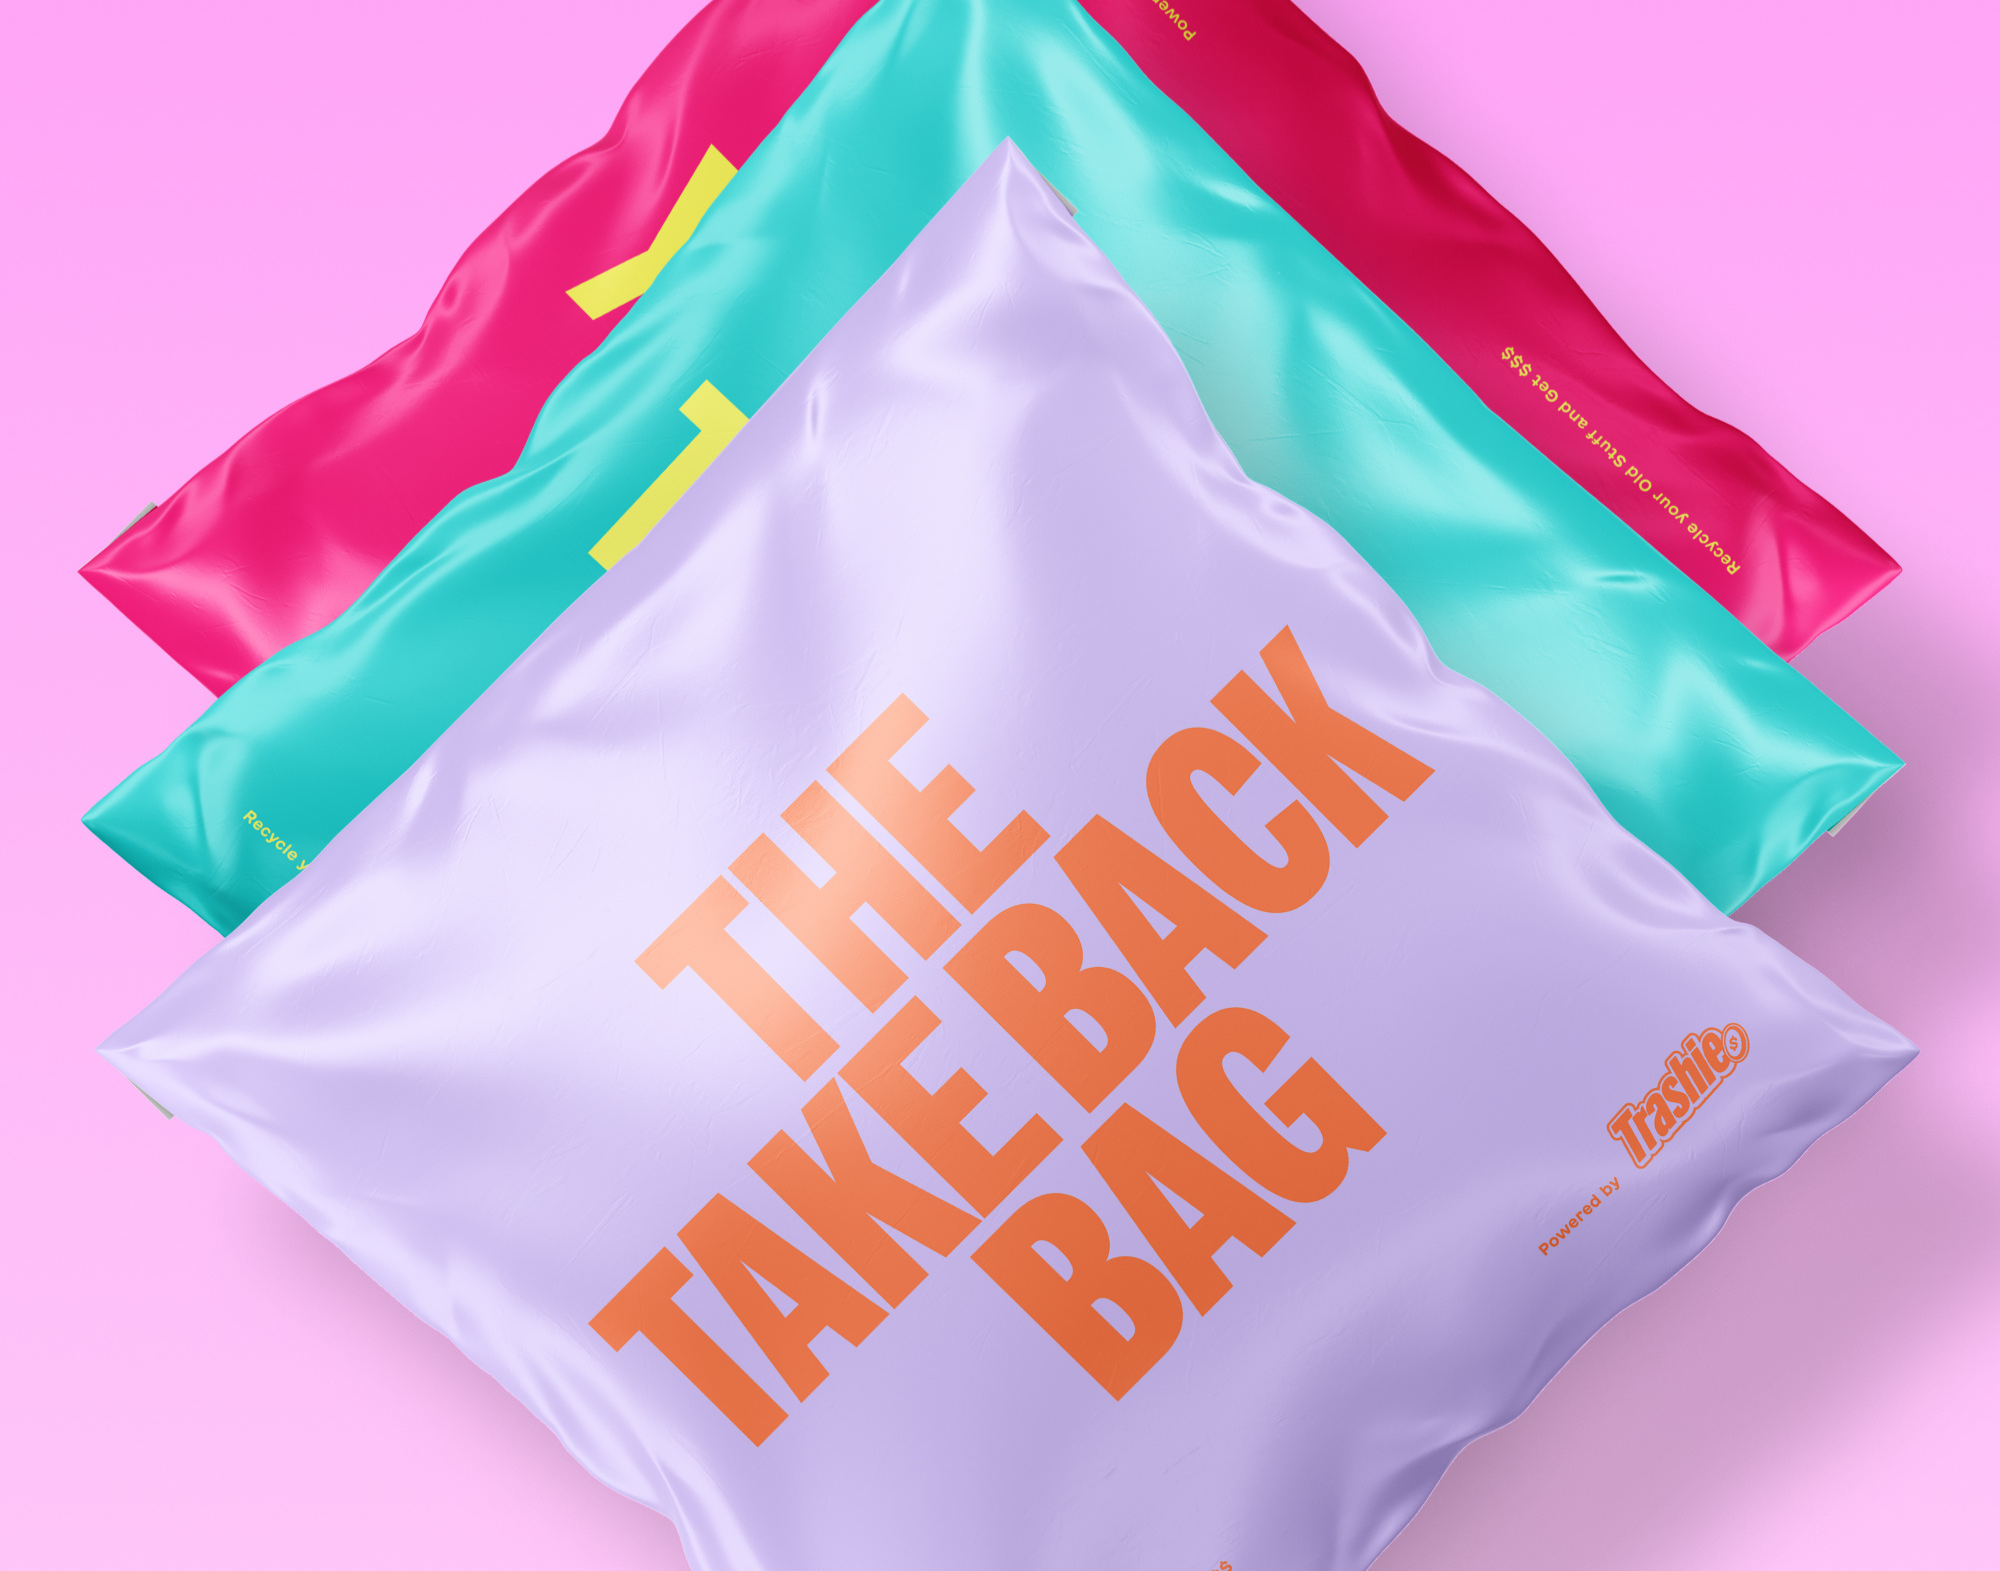 Take Back Bag – MATE the Label